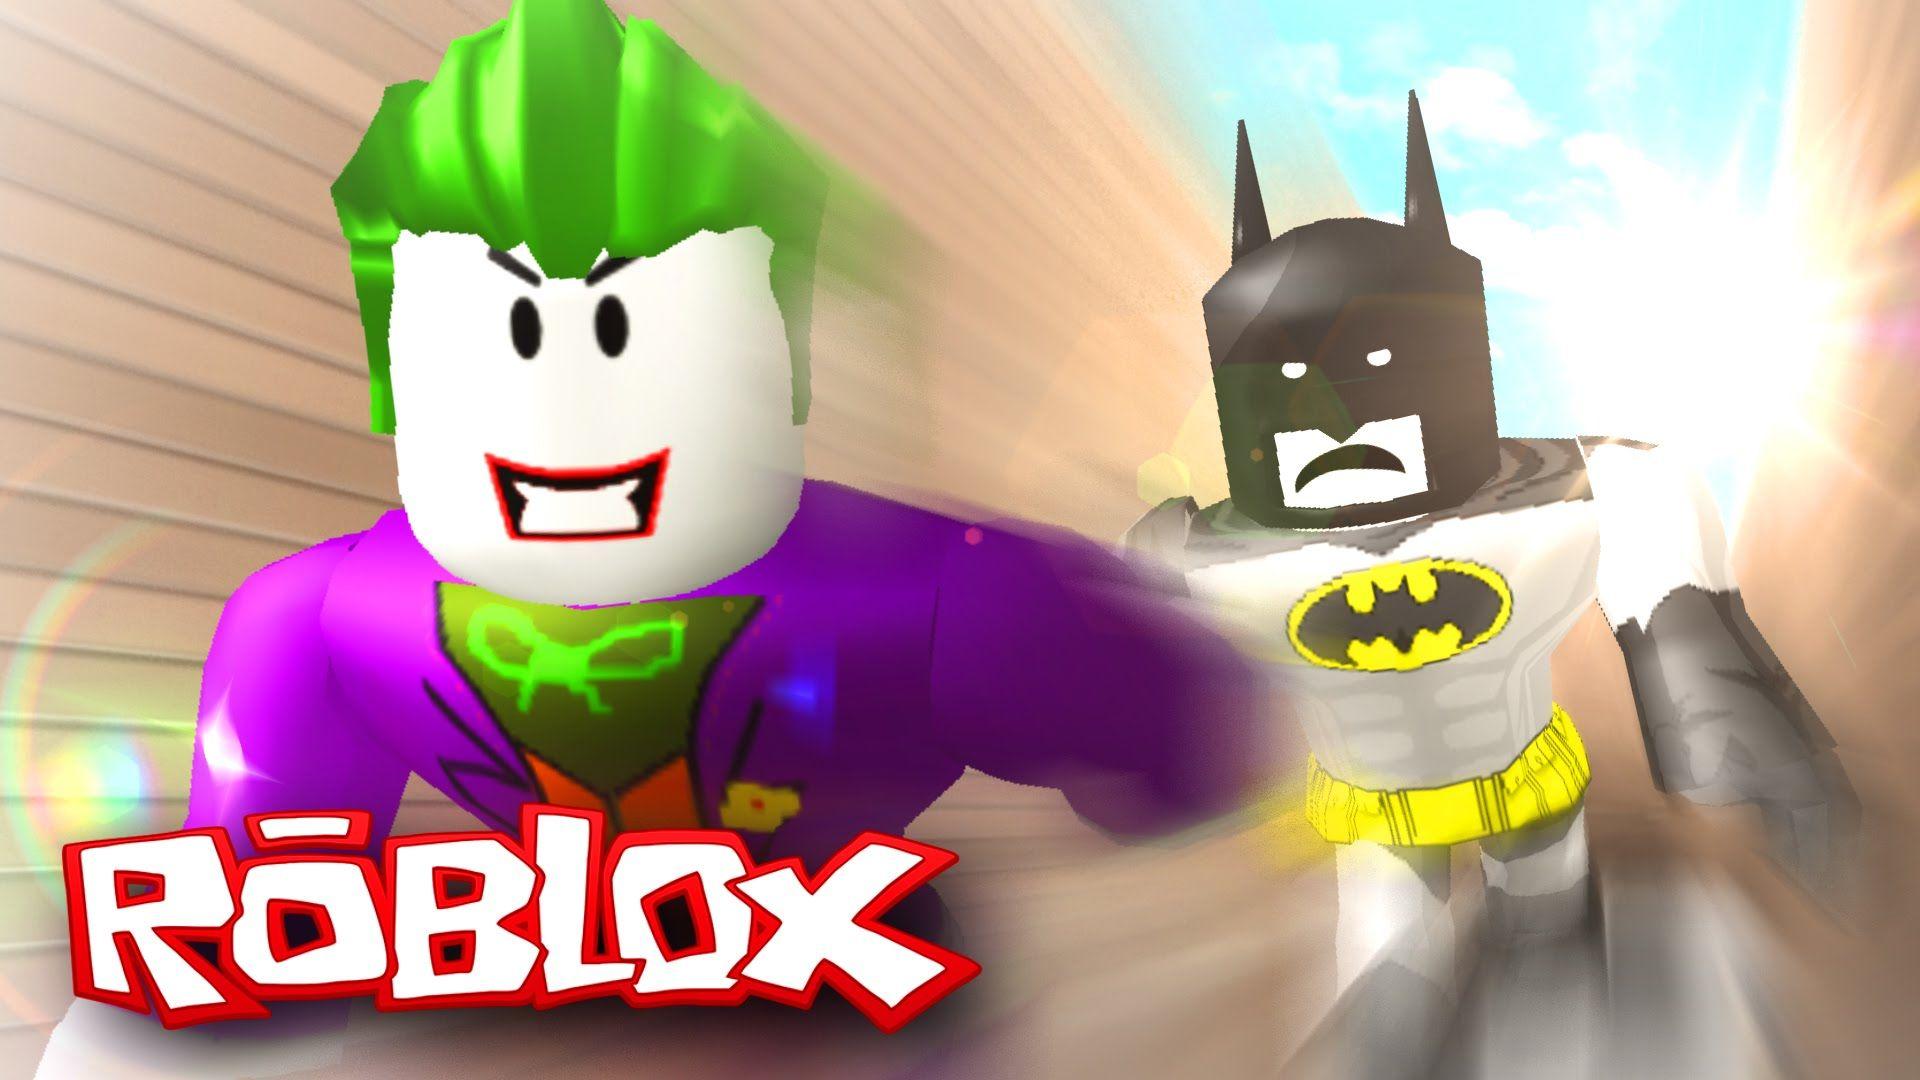 Roblox Adventures / Super Hero Life / Becoming a Villain in Roblox